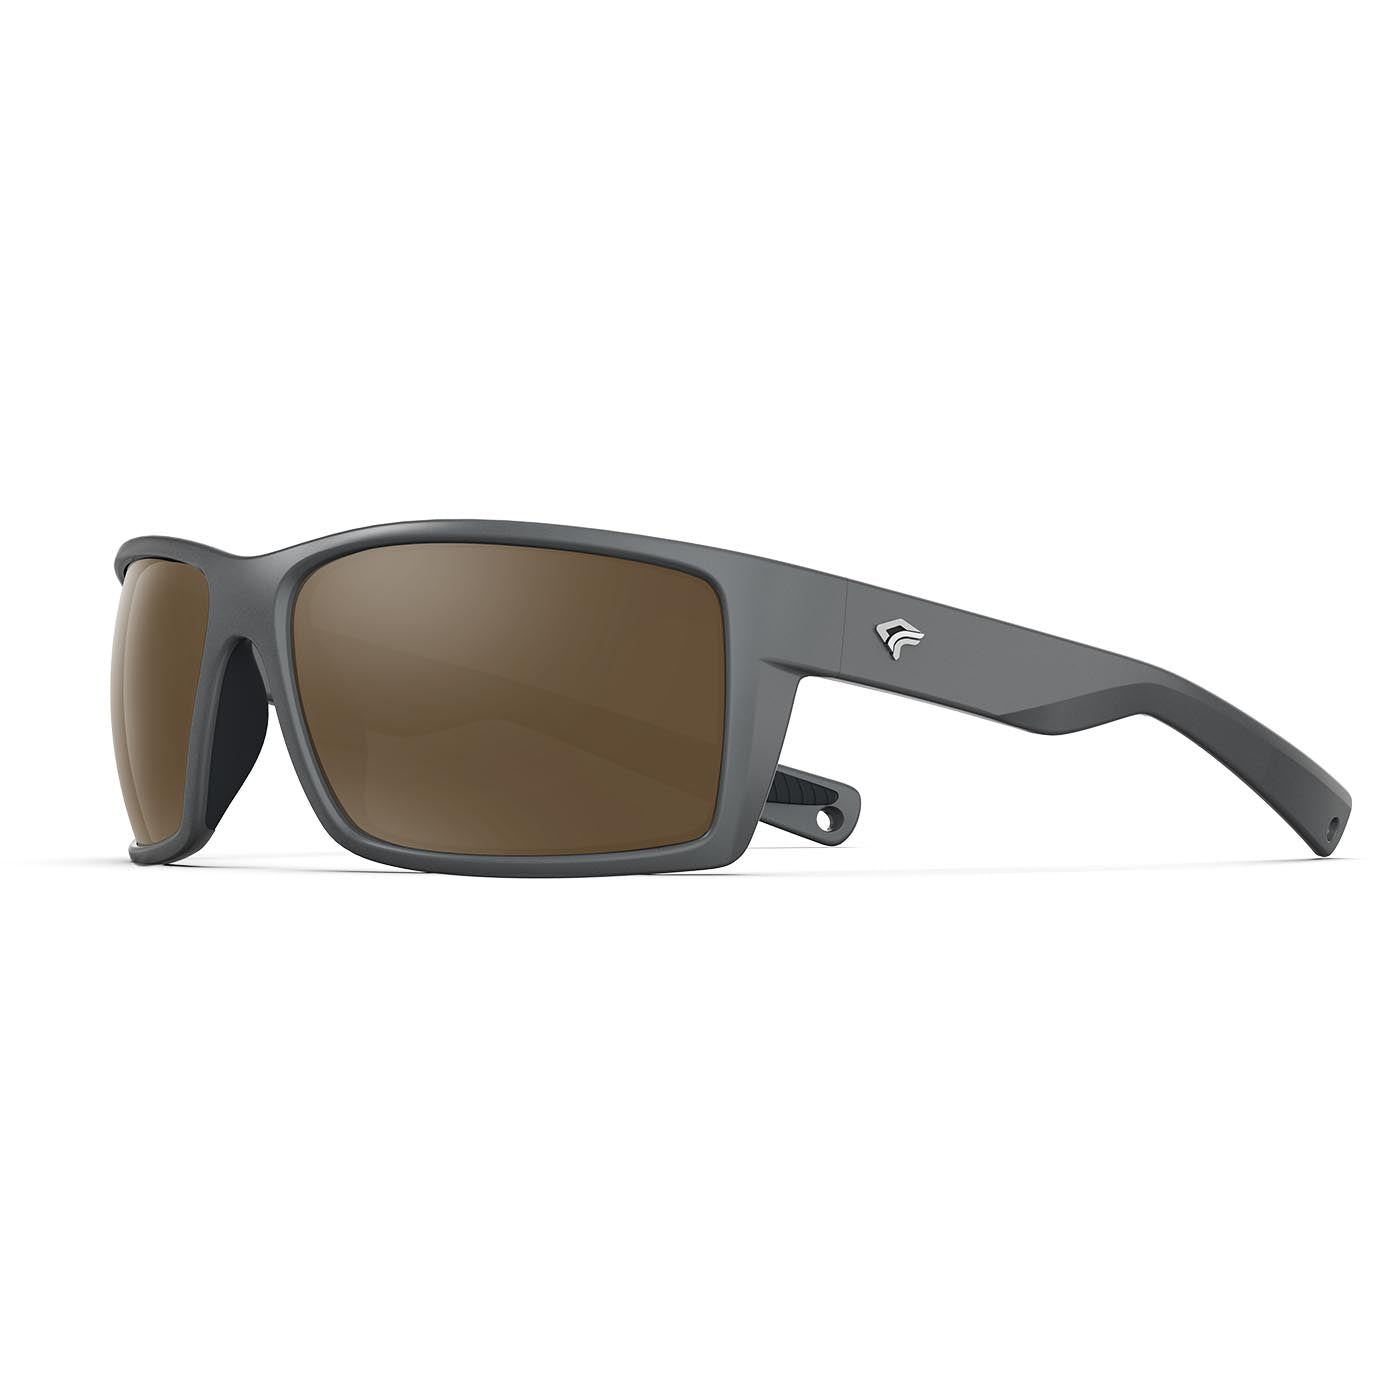 Unique Polarized Sunglasses - Olive Green Frame & Black Lens